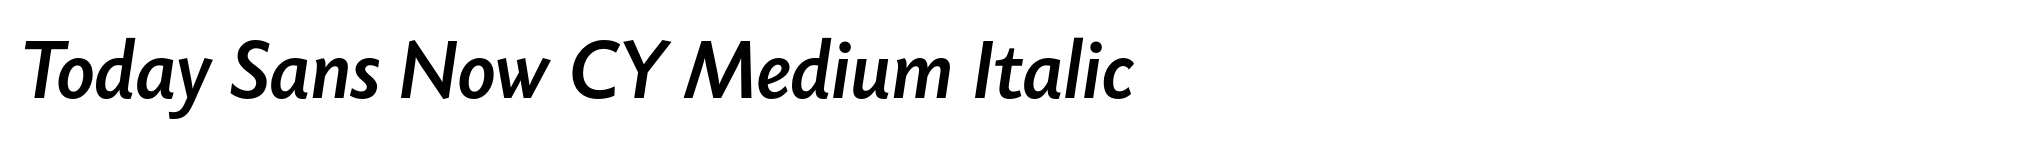 Today Sans Now CY Medium Italic image